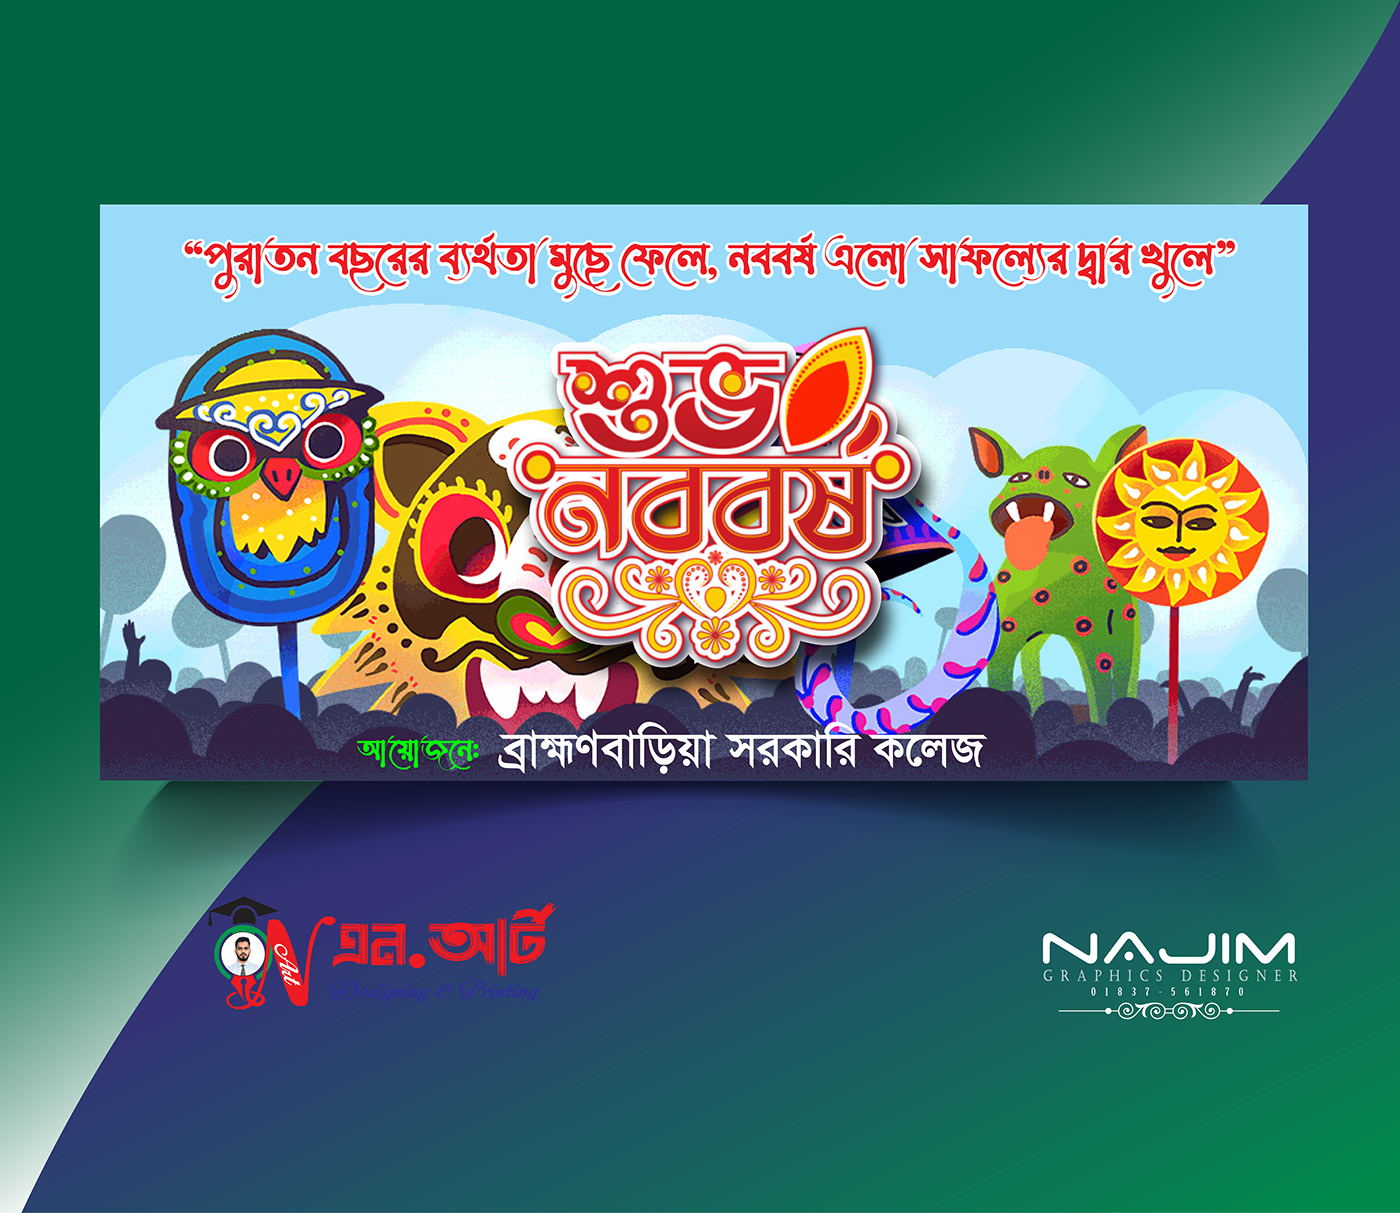 Bangla festival bangla new year Bengali New Year boishakh Pahela Baishakh Pohela Boishakh নববর্ষ পহেলা বৈশাখ বাংলা নববর্ষ শুভ নববর্ষ